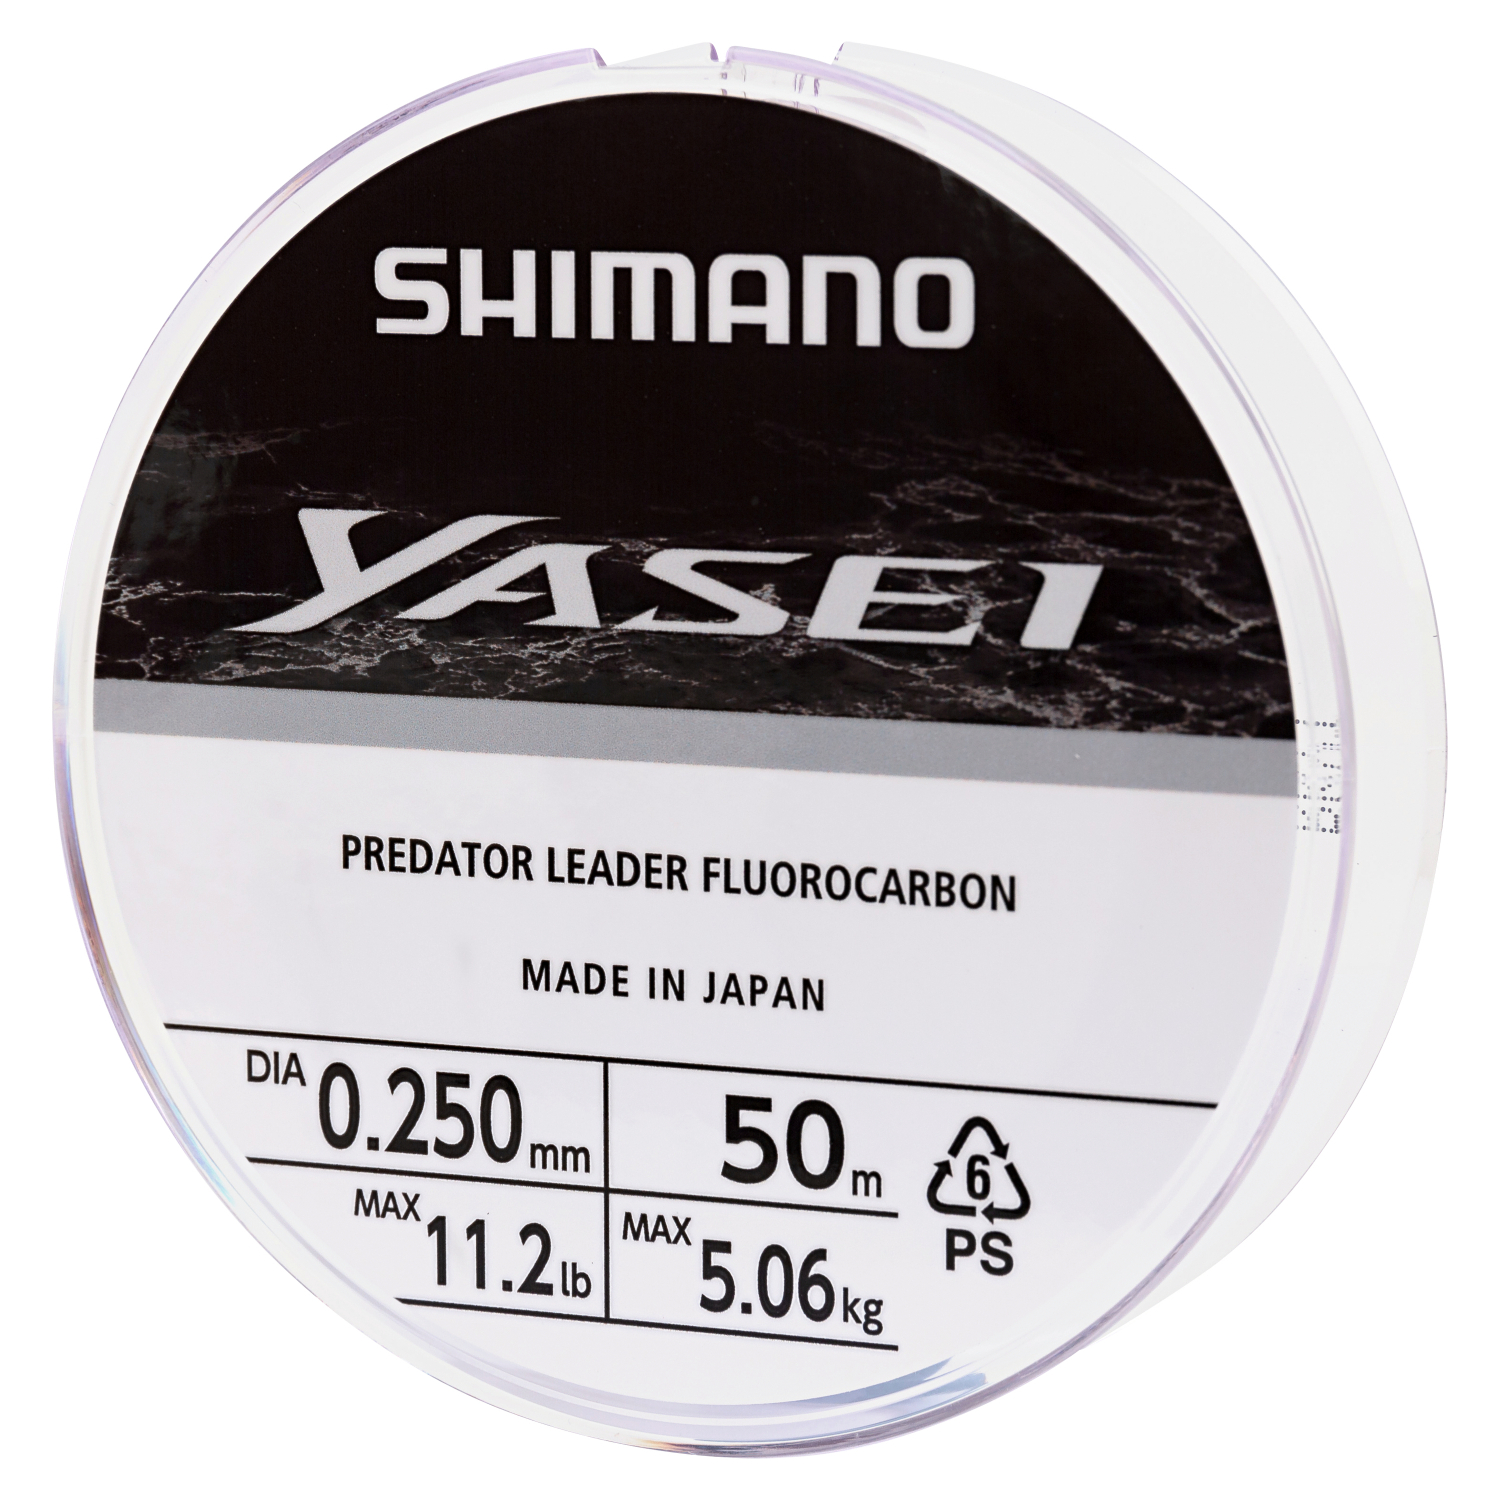 Shimano Yasei Predator Fluorocarbon fishing line (transparent, 50 m) at low  prices